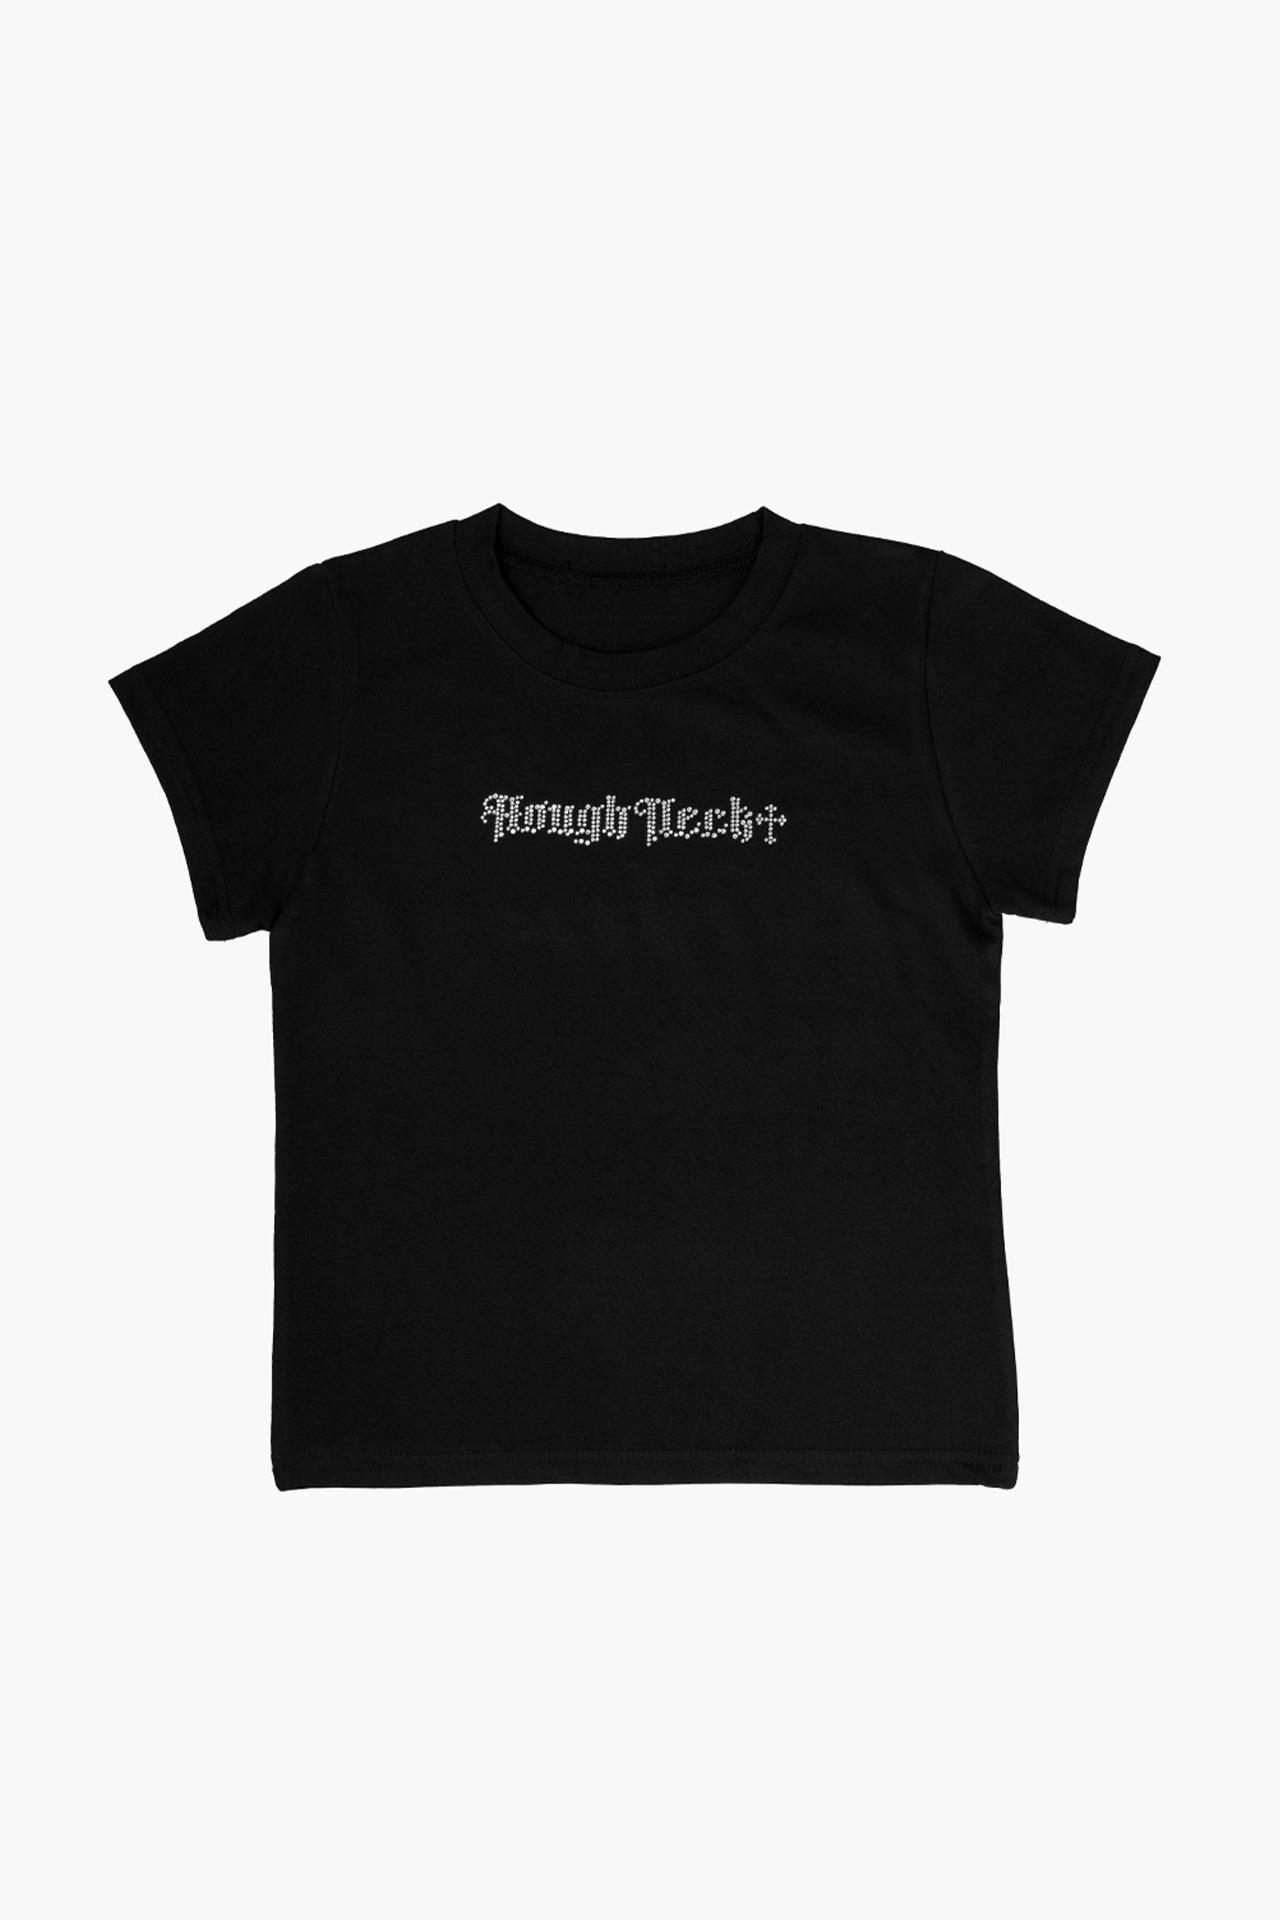 ROUGHNECK HOTFIX  T-SHIRT BLACK